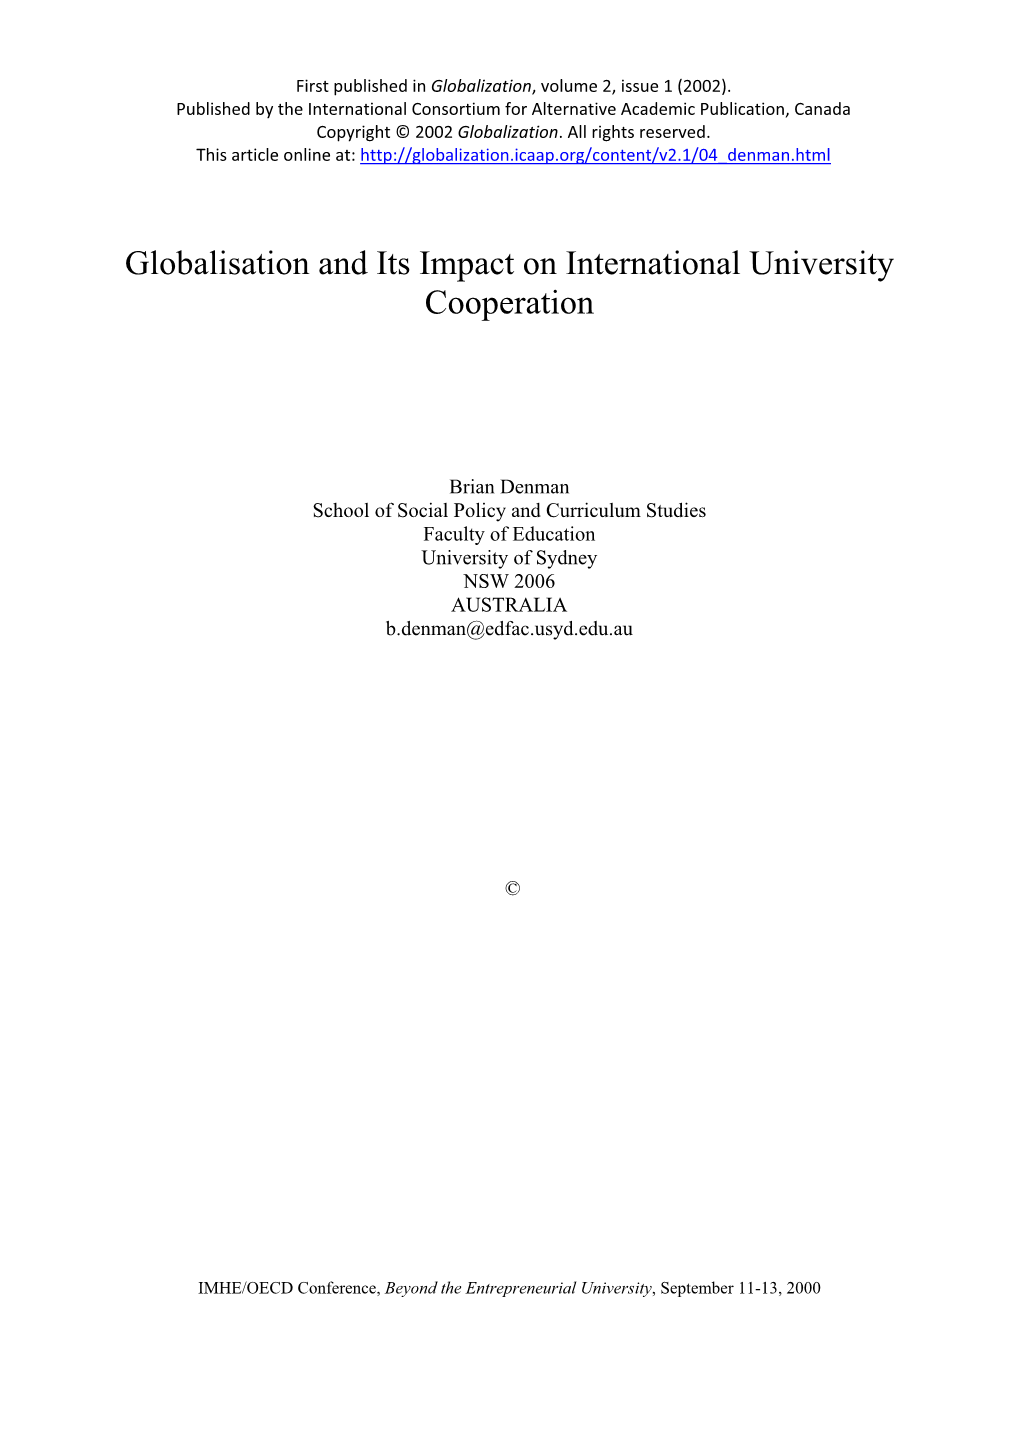 Globalisation and Its Impact on International University Cooperation